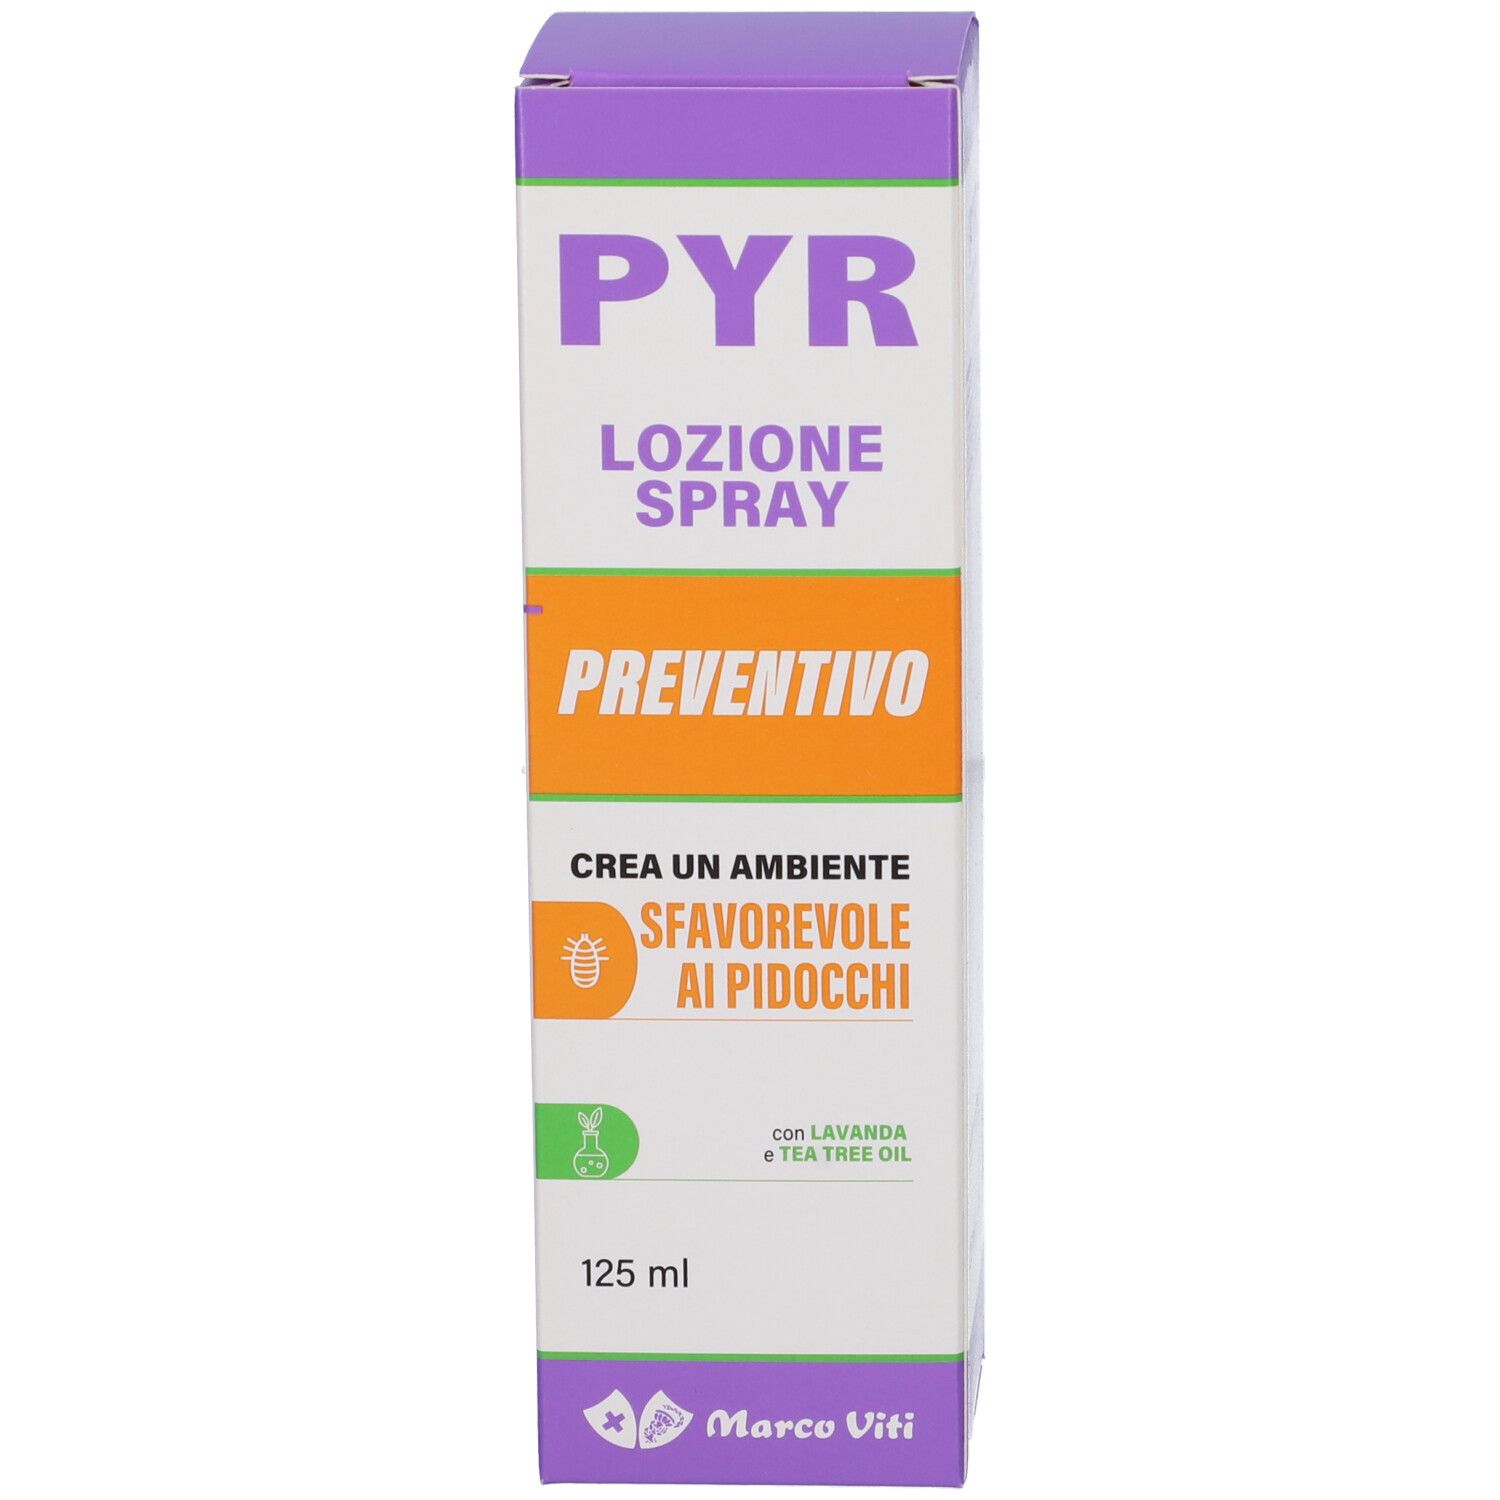 PYR Preventivo Lozione Spray